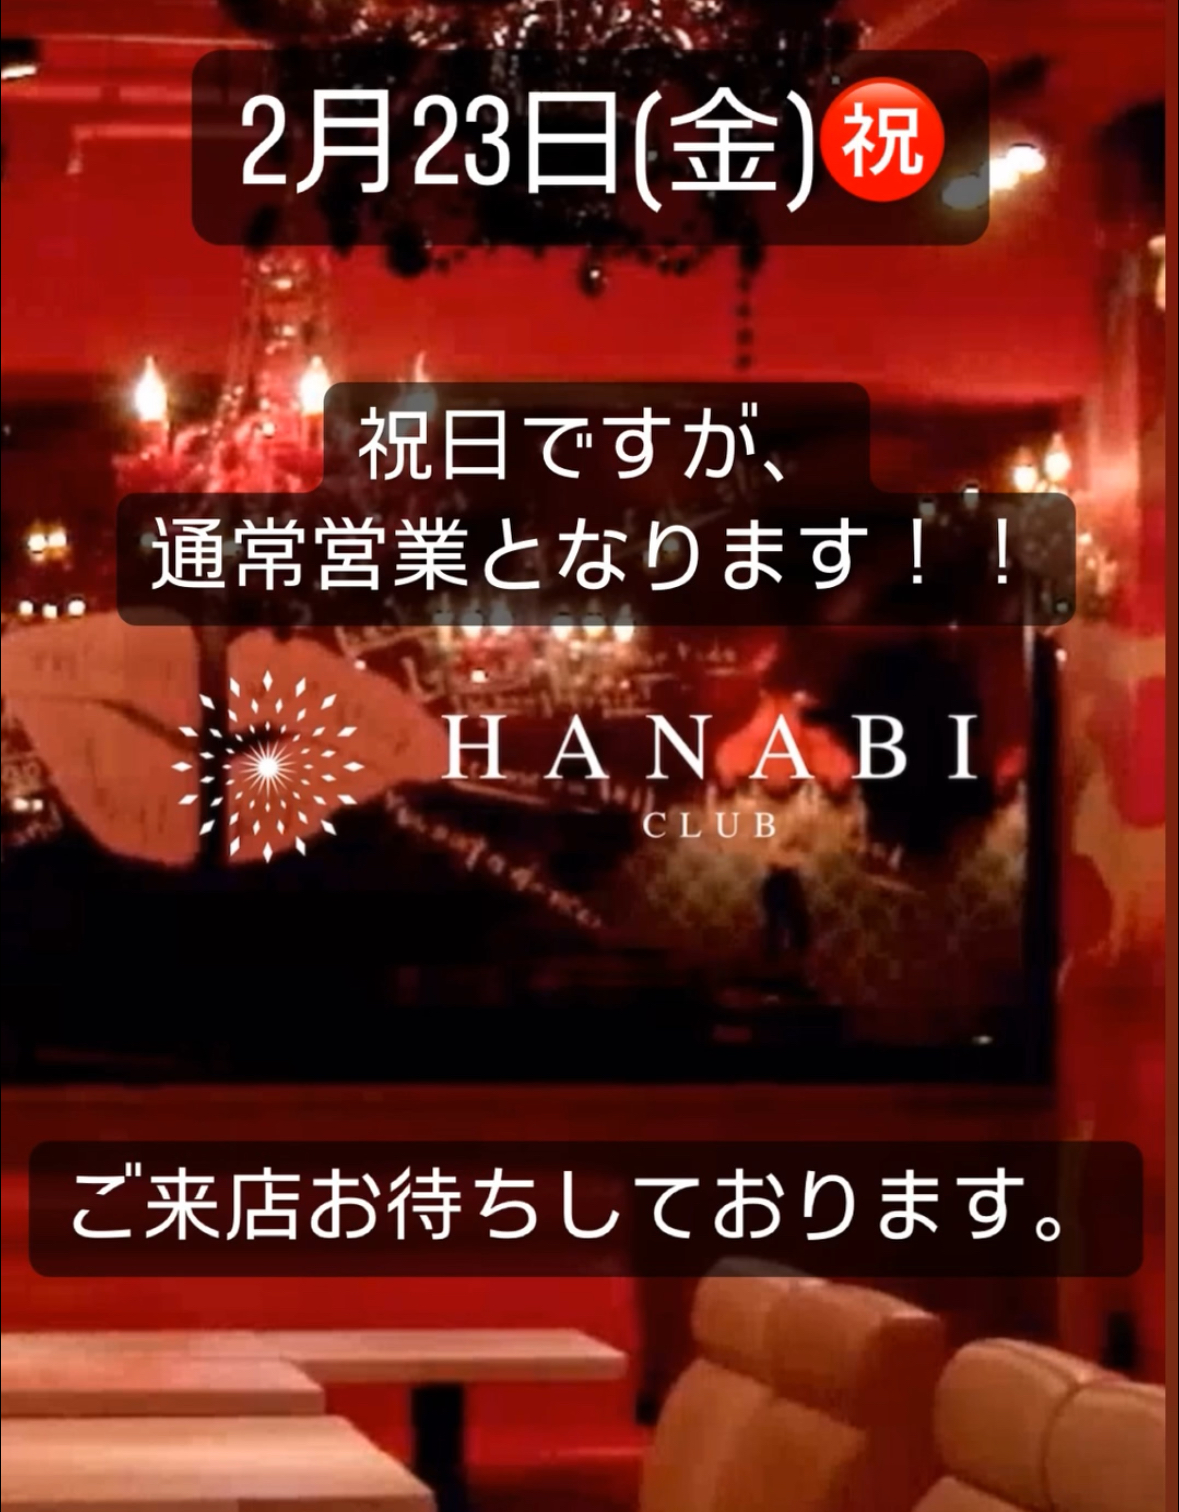 EVENT-【祝日営業のお知らせ】（HANABI）